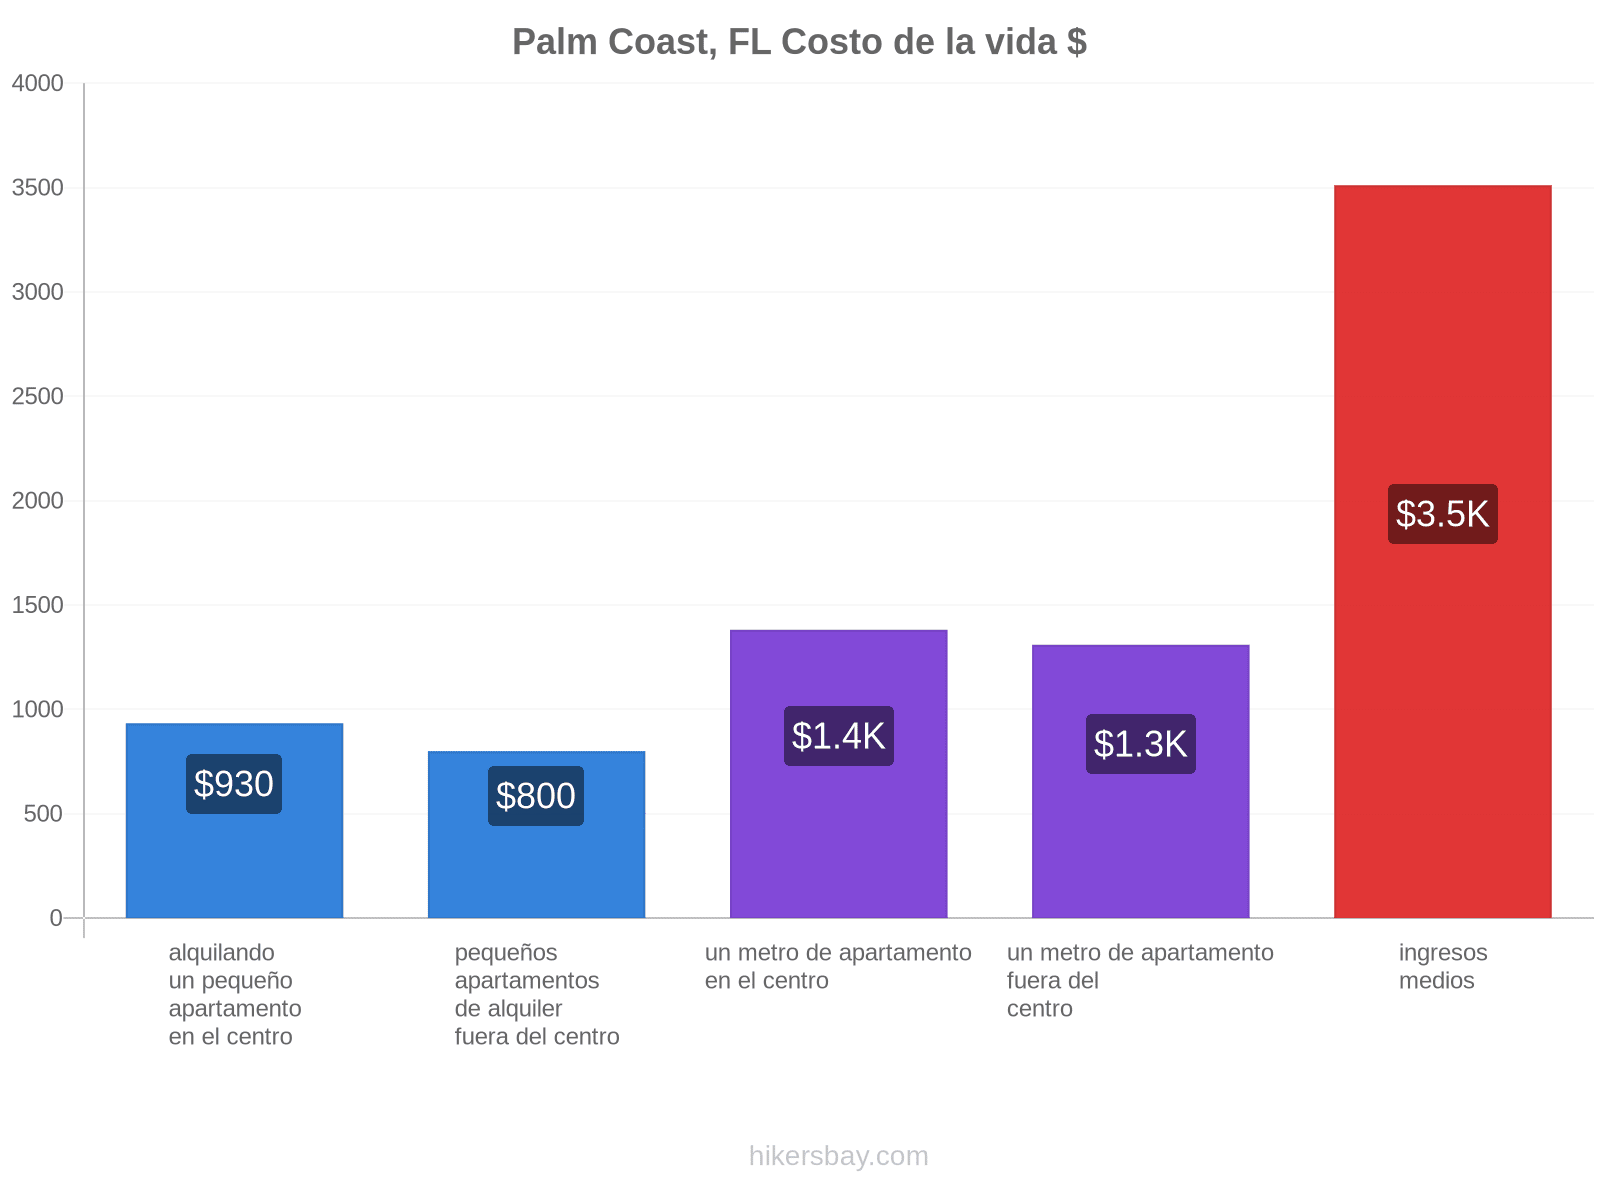 Palm Coast, FL costo de la vida hikersbay.com